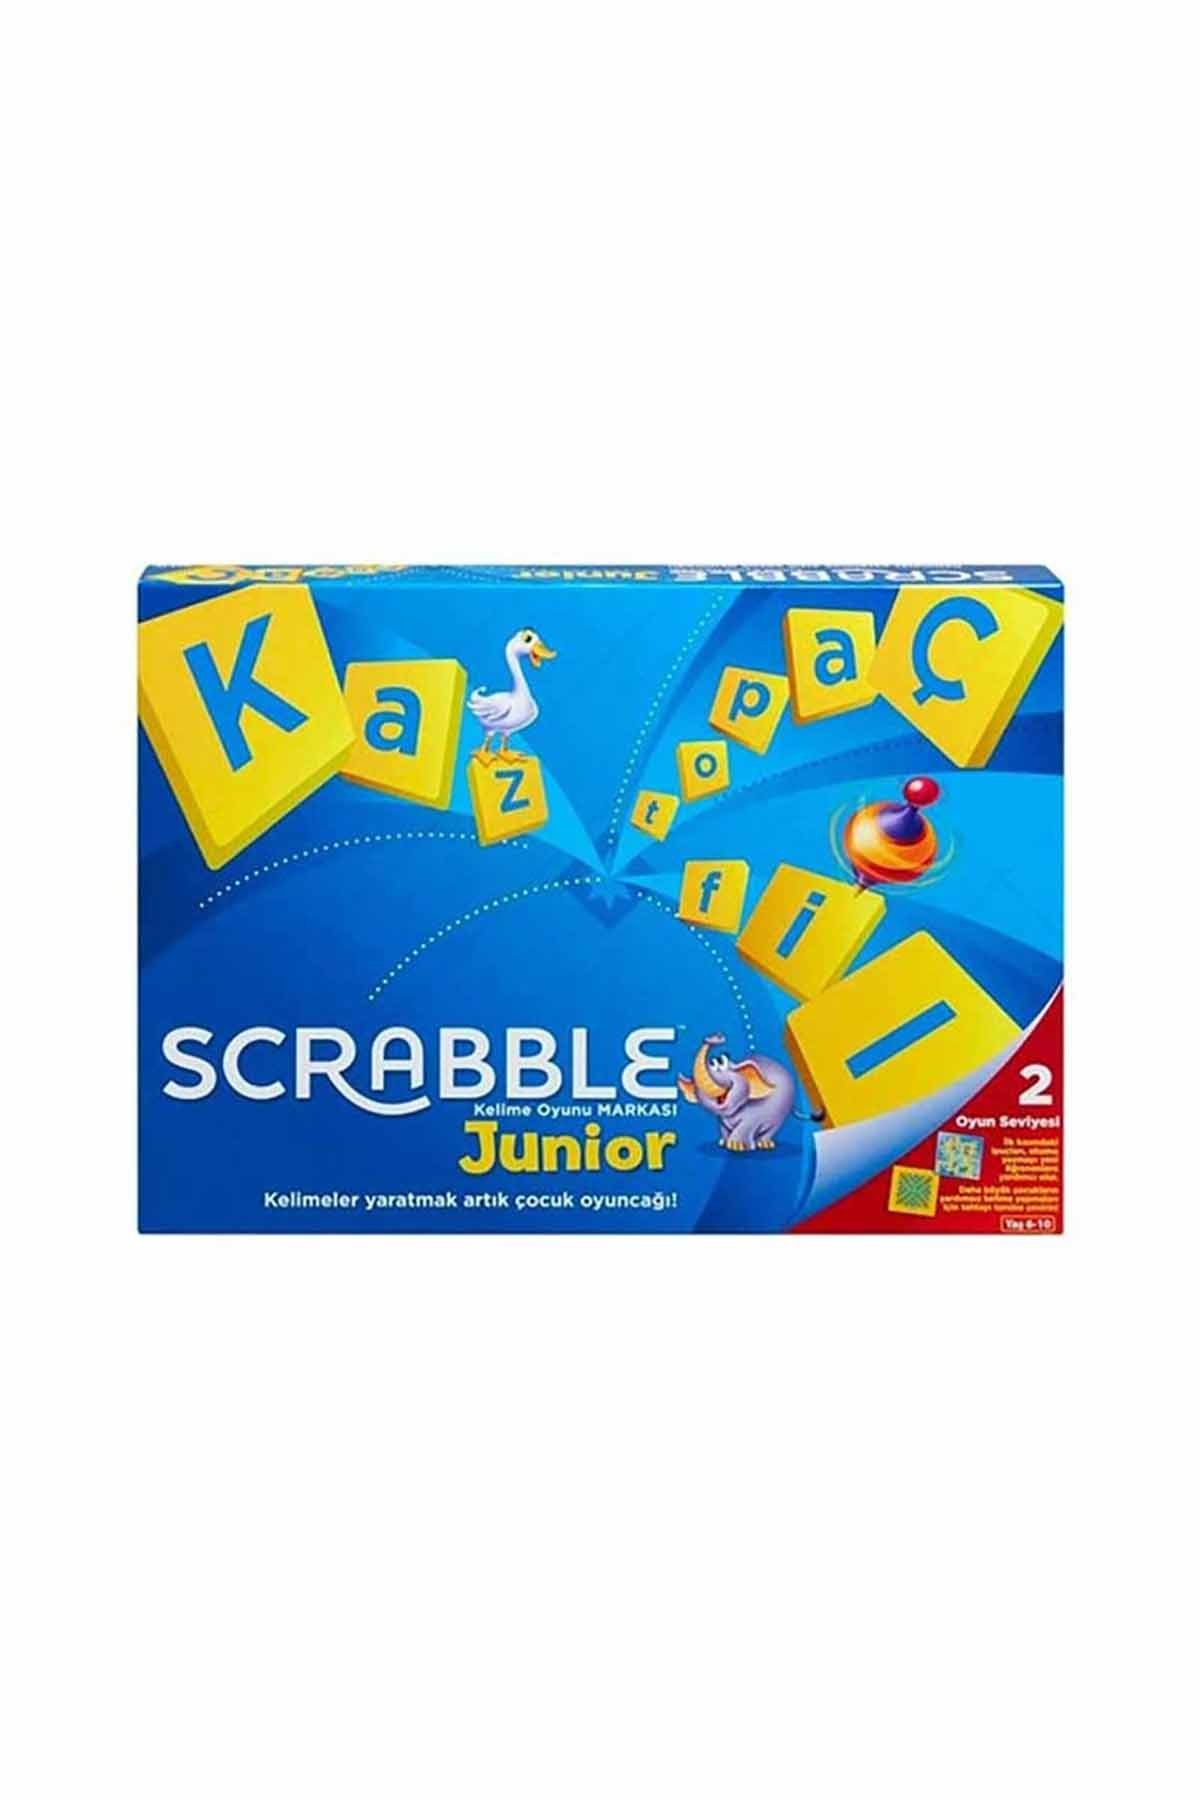 Mattel Scrabble Junior Türkçe